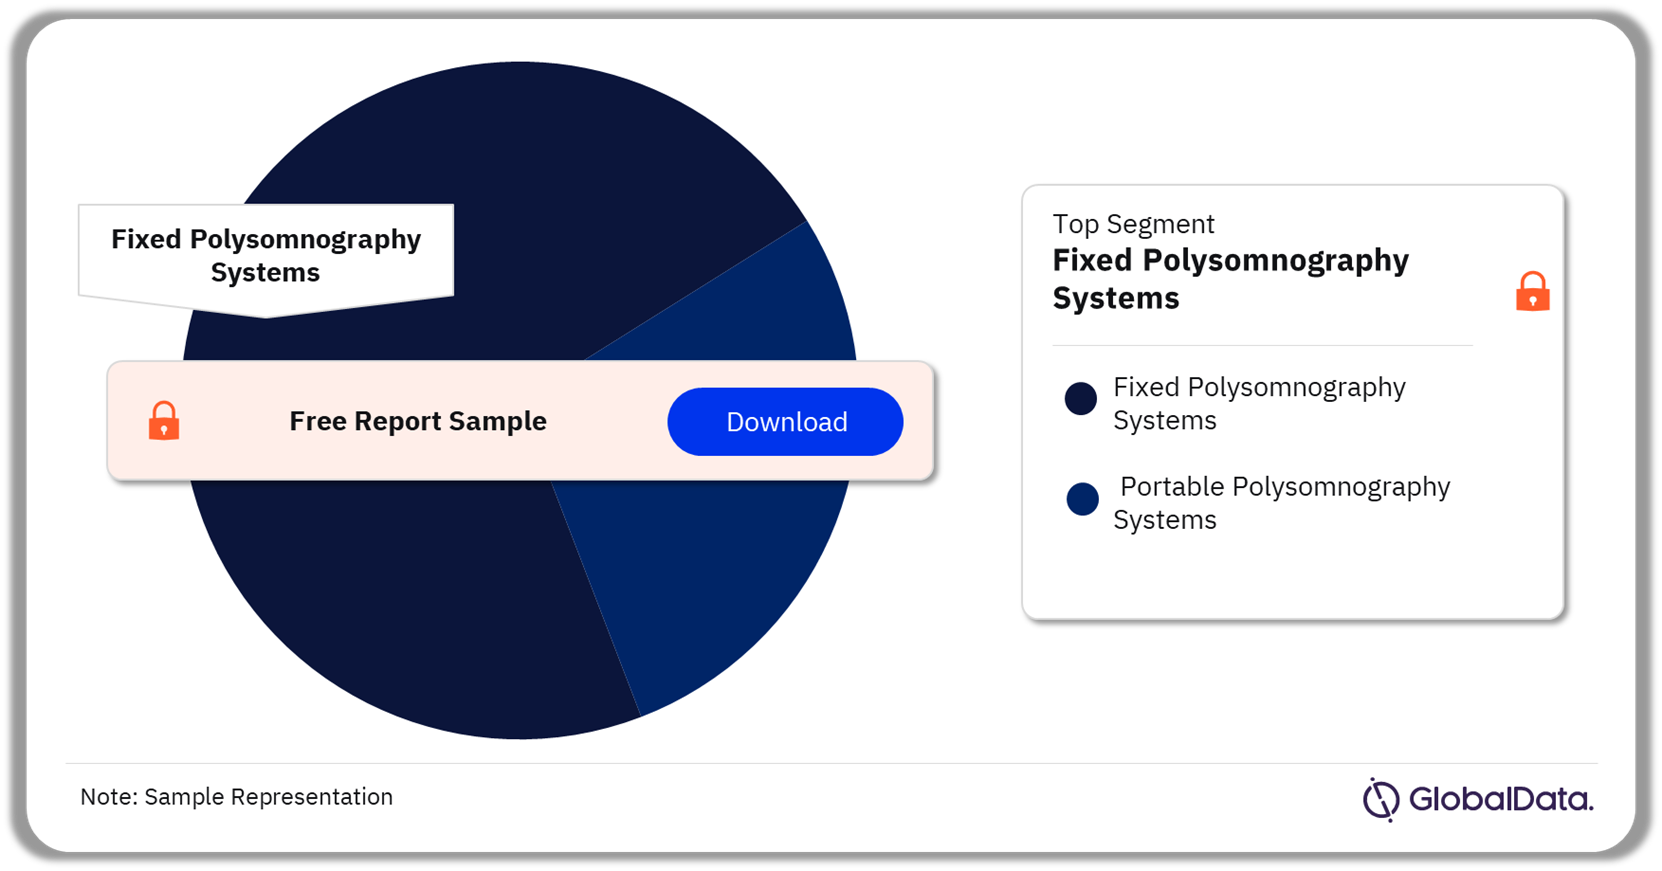 Sleep Apnea Diagnostic Systems Market Analysis by Segments, 2023 (%)